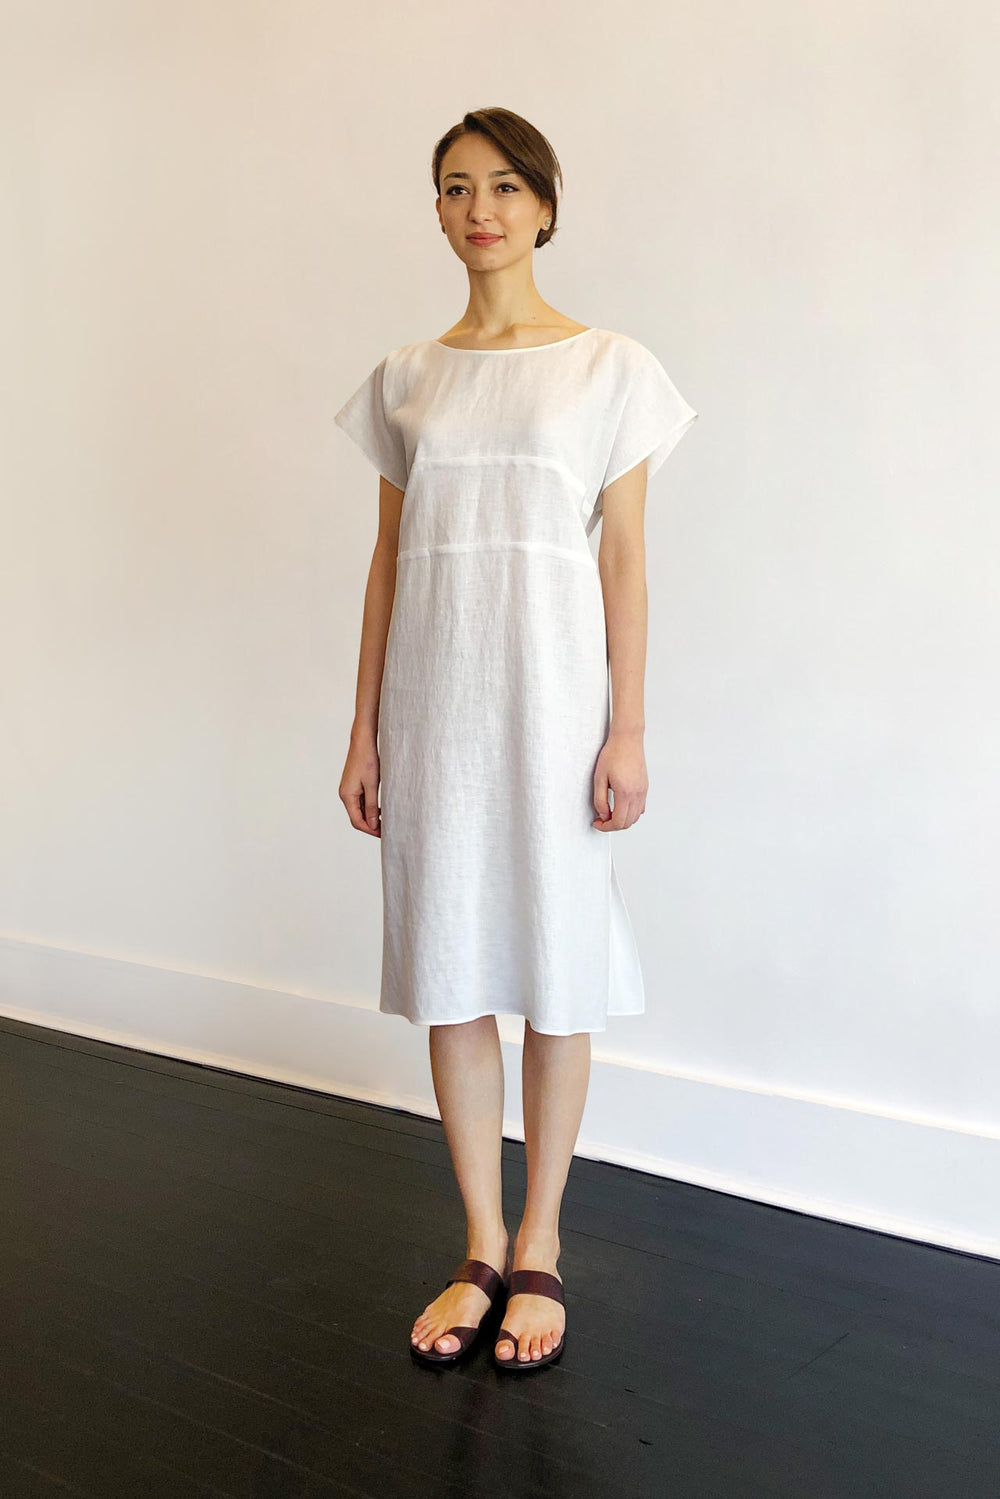 Fashion Designer CARL KAPP collection | Lisa Onesize Fits All White Linen dress | Sydney Australia